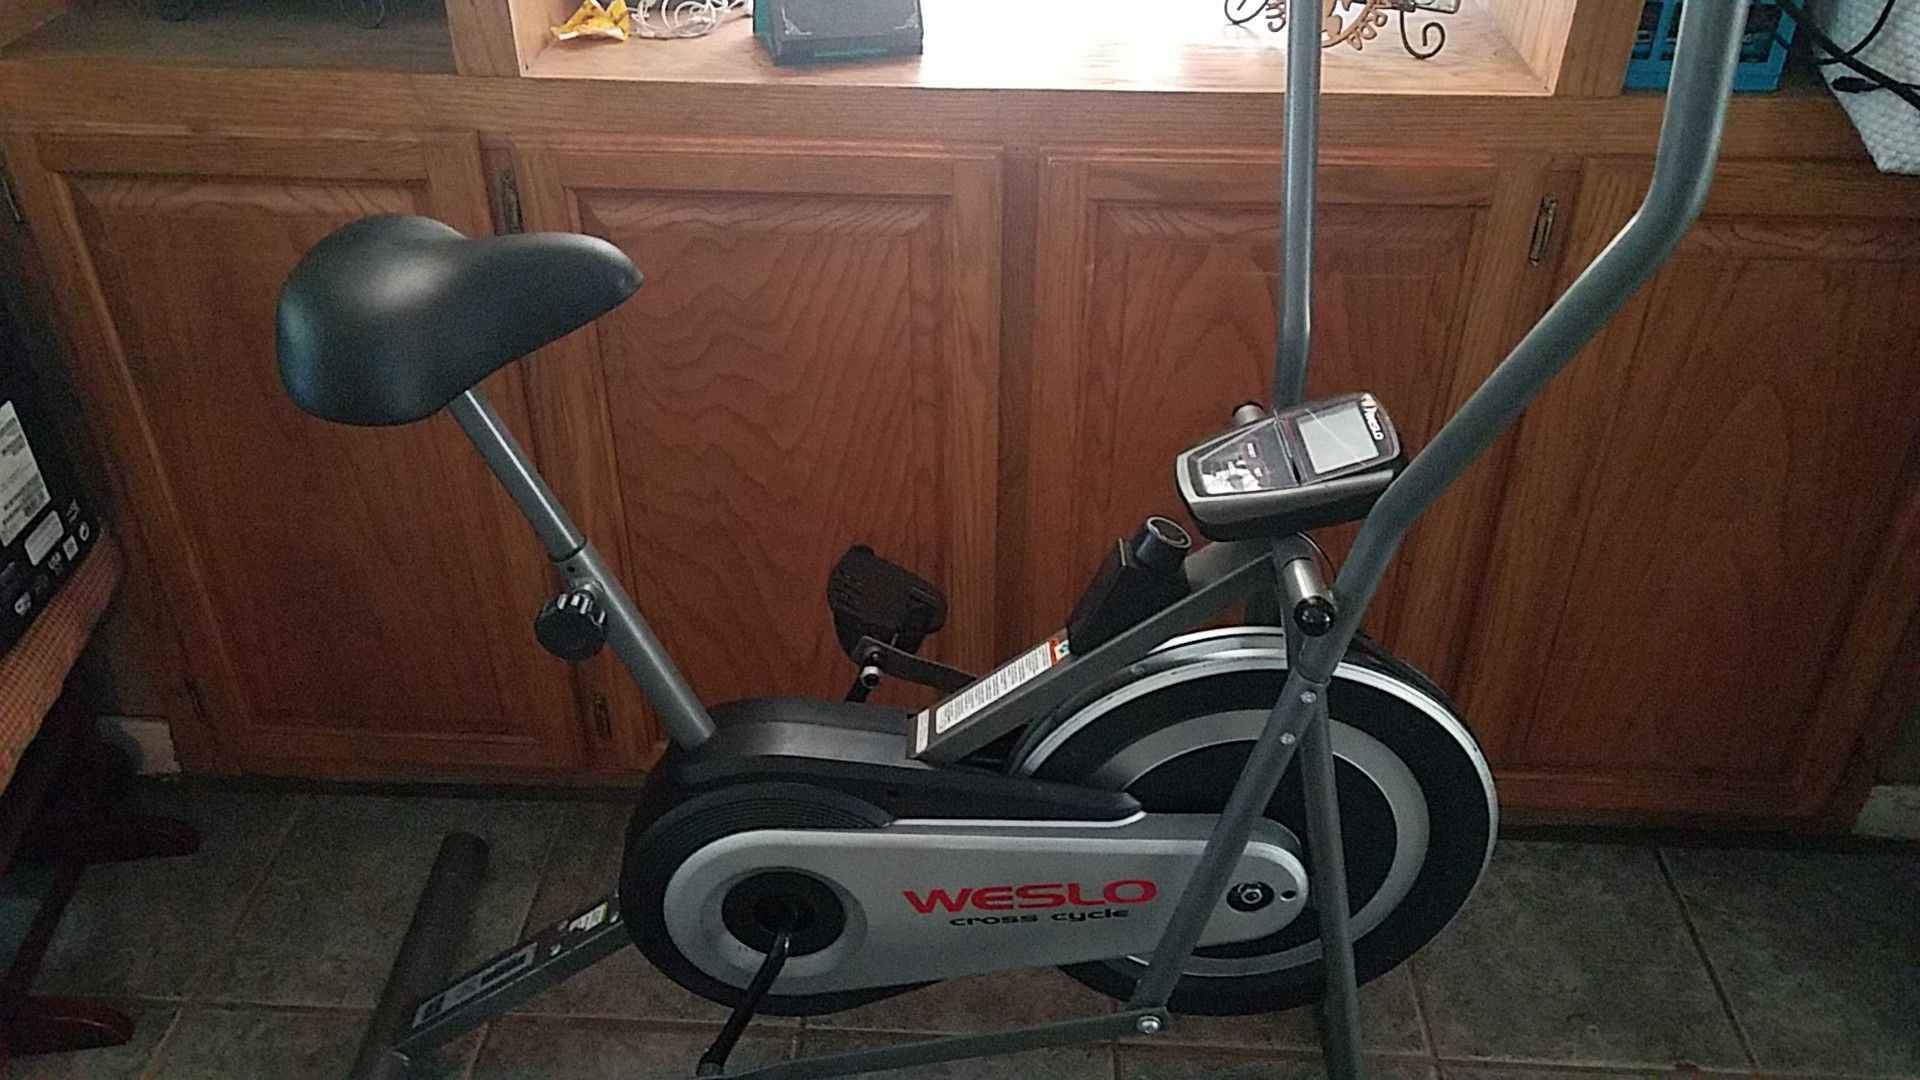 Weslos exercise bike